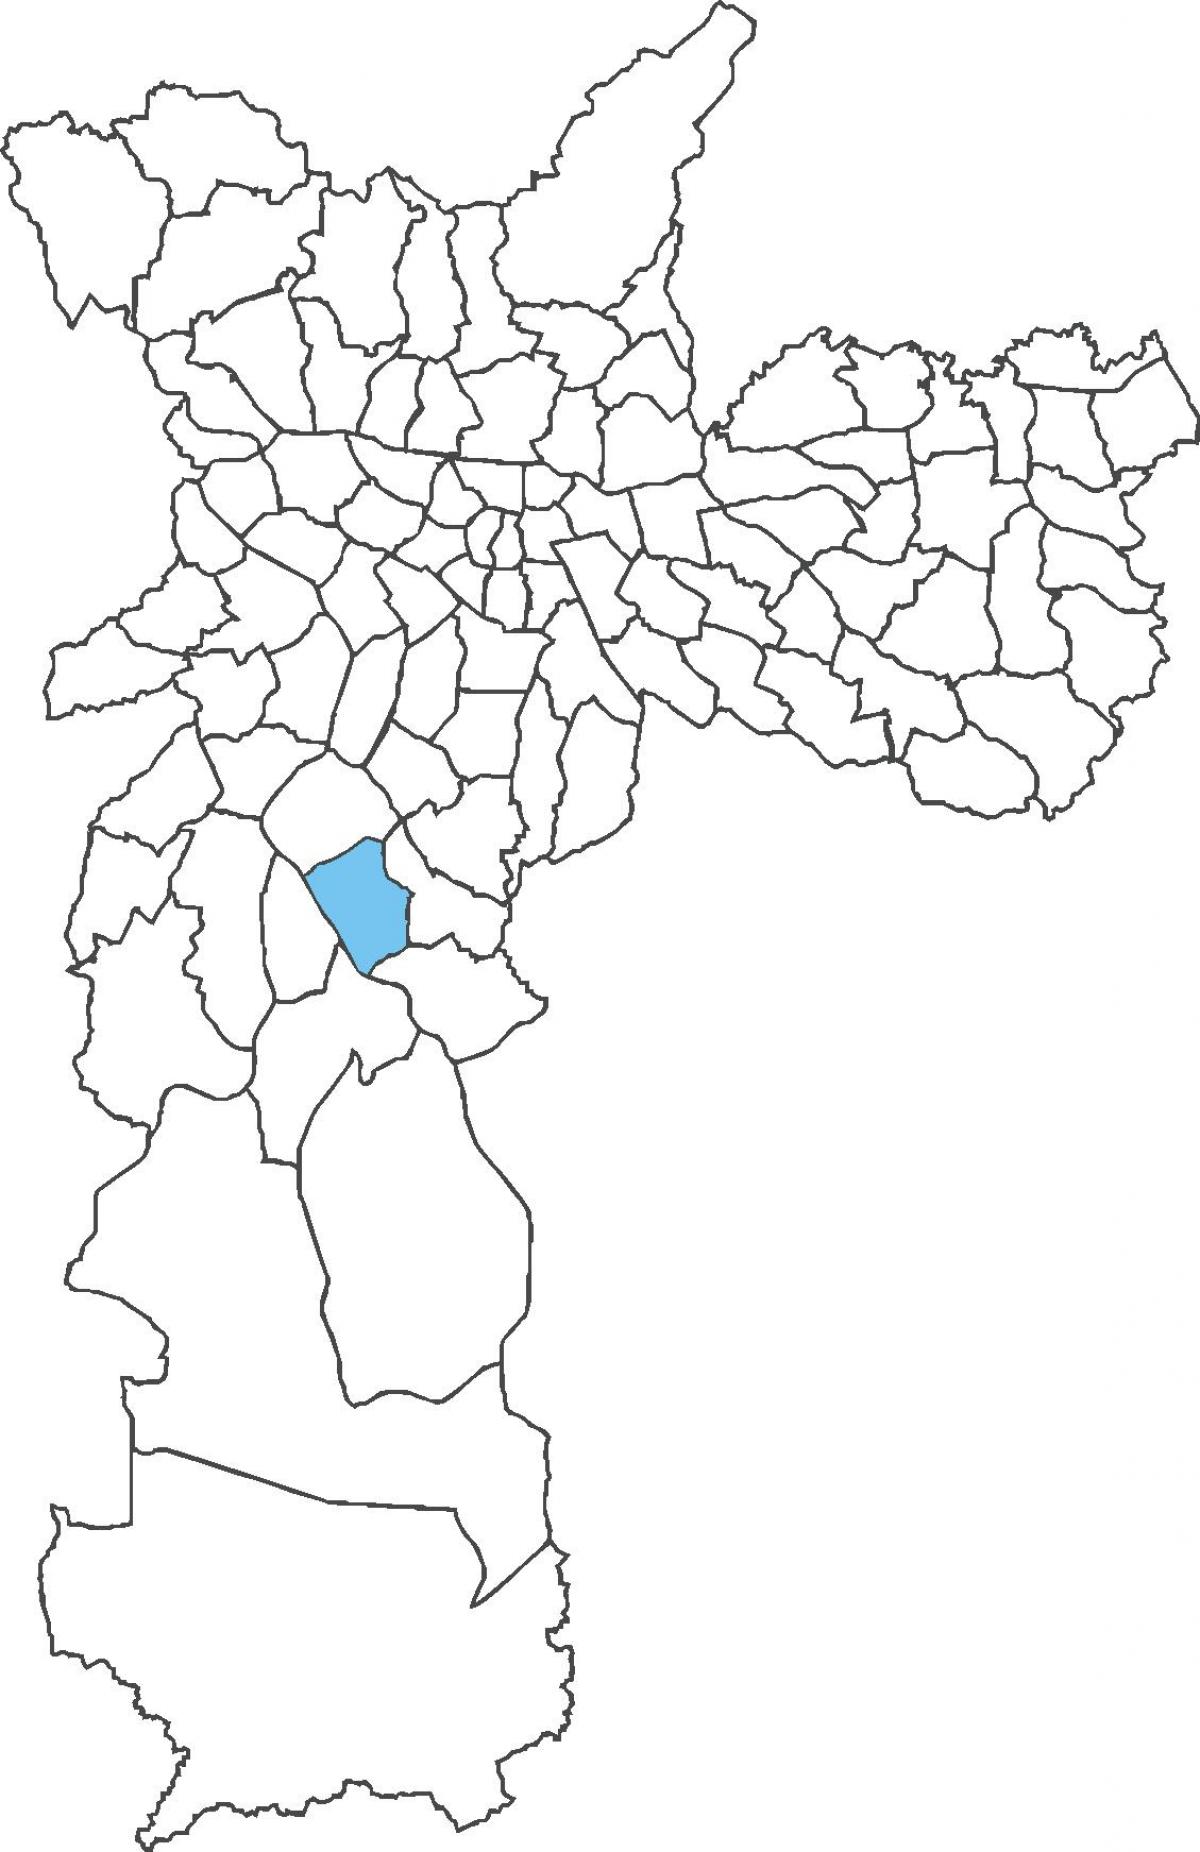 Mapa Campo Grande region